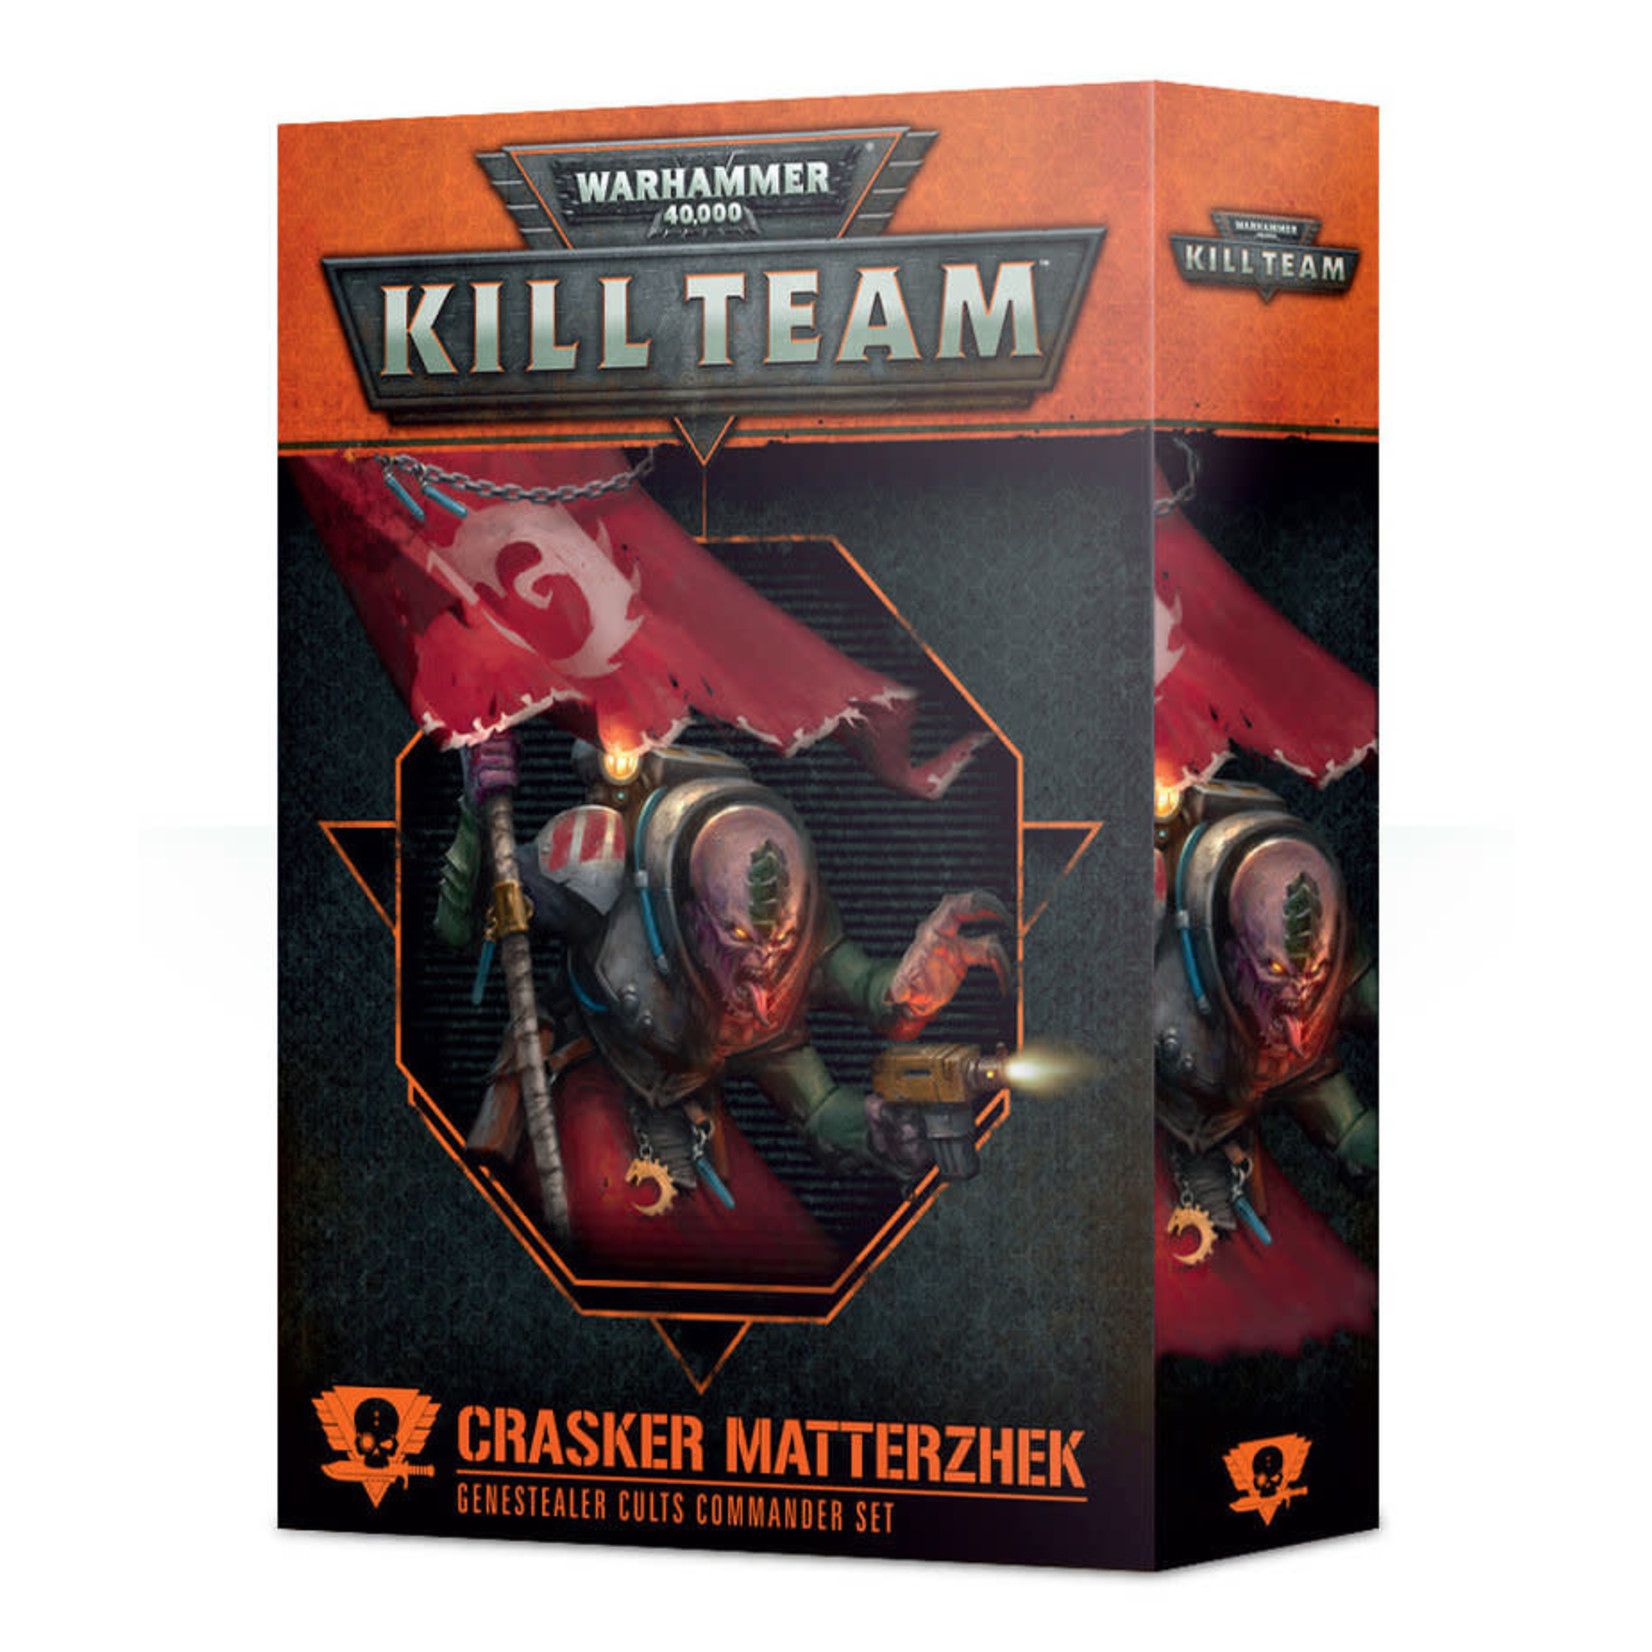 Warhammer 40k Kill Team: Crasker Matterzhek